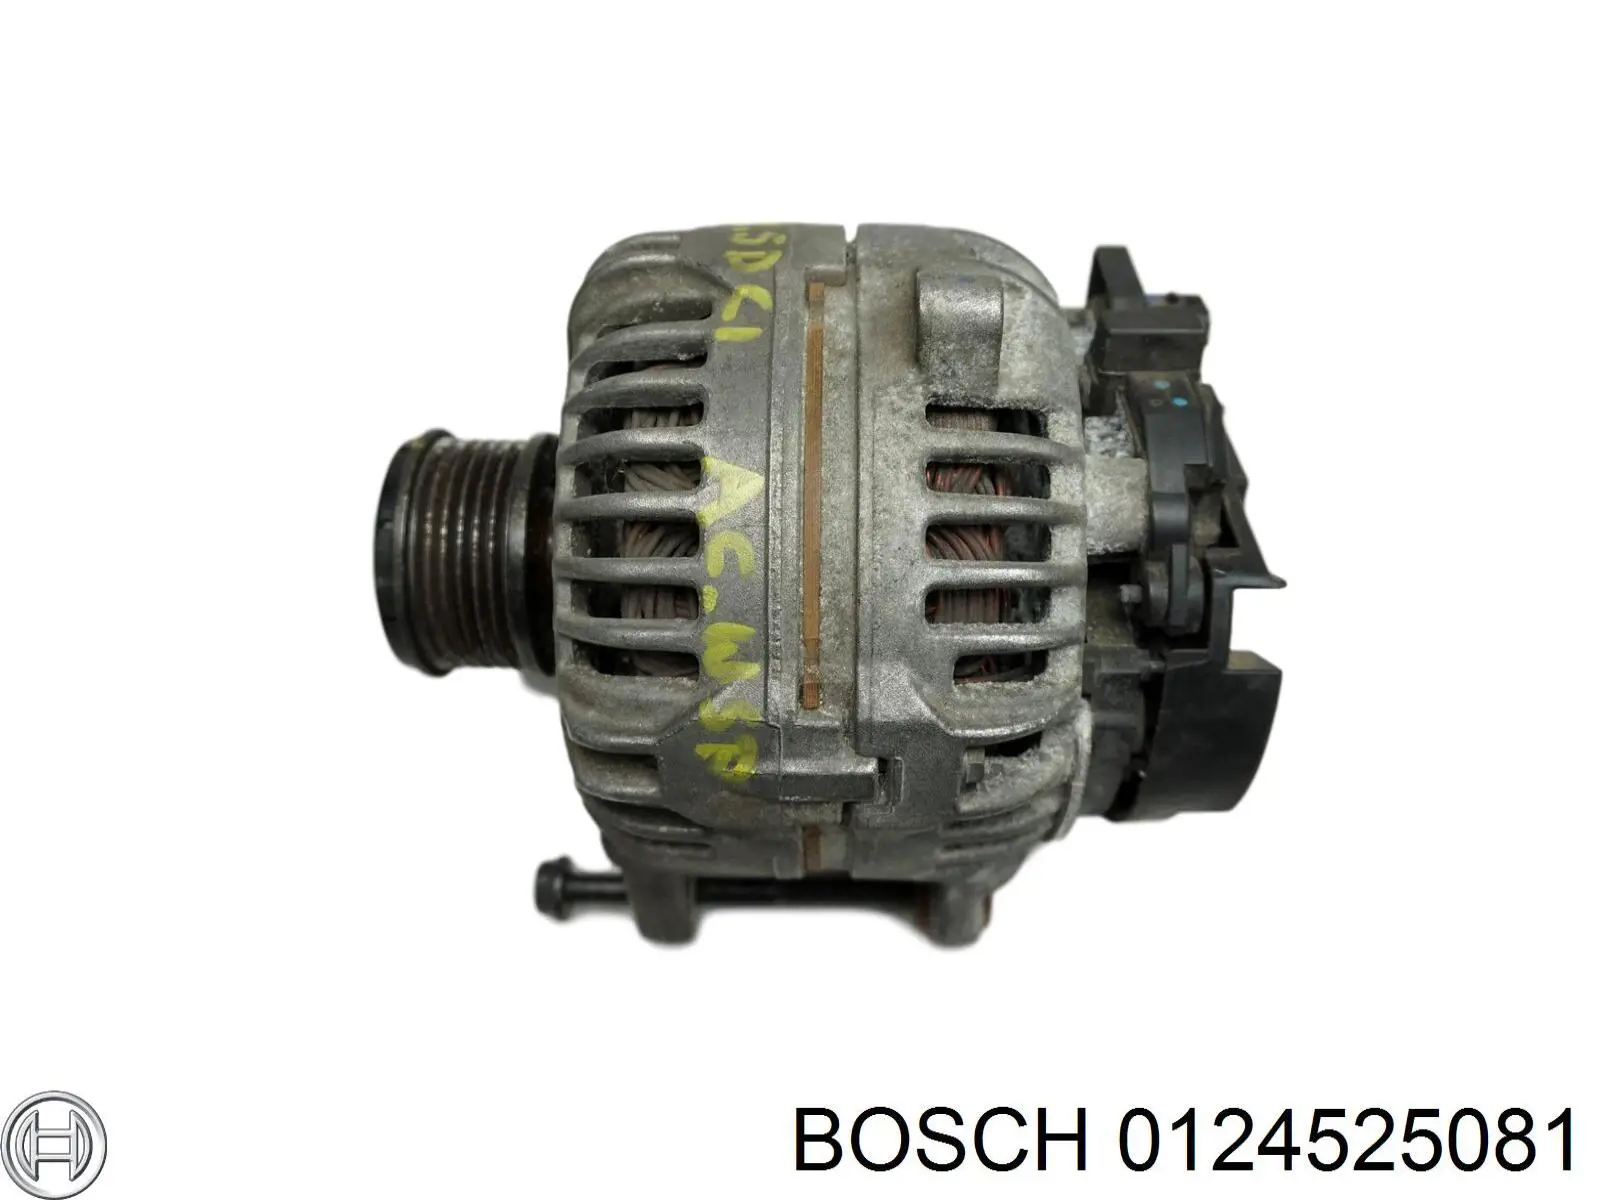 0124525081 Bosch alternador